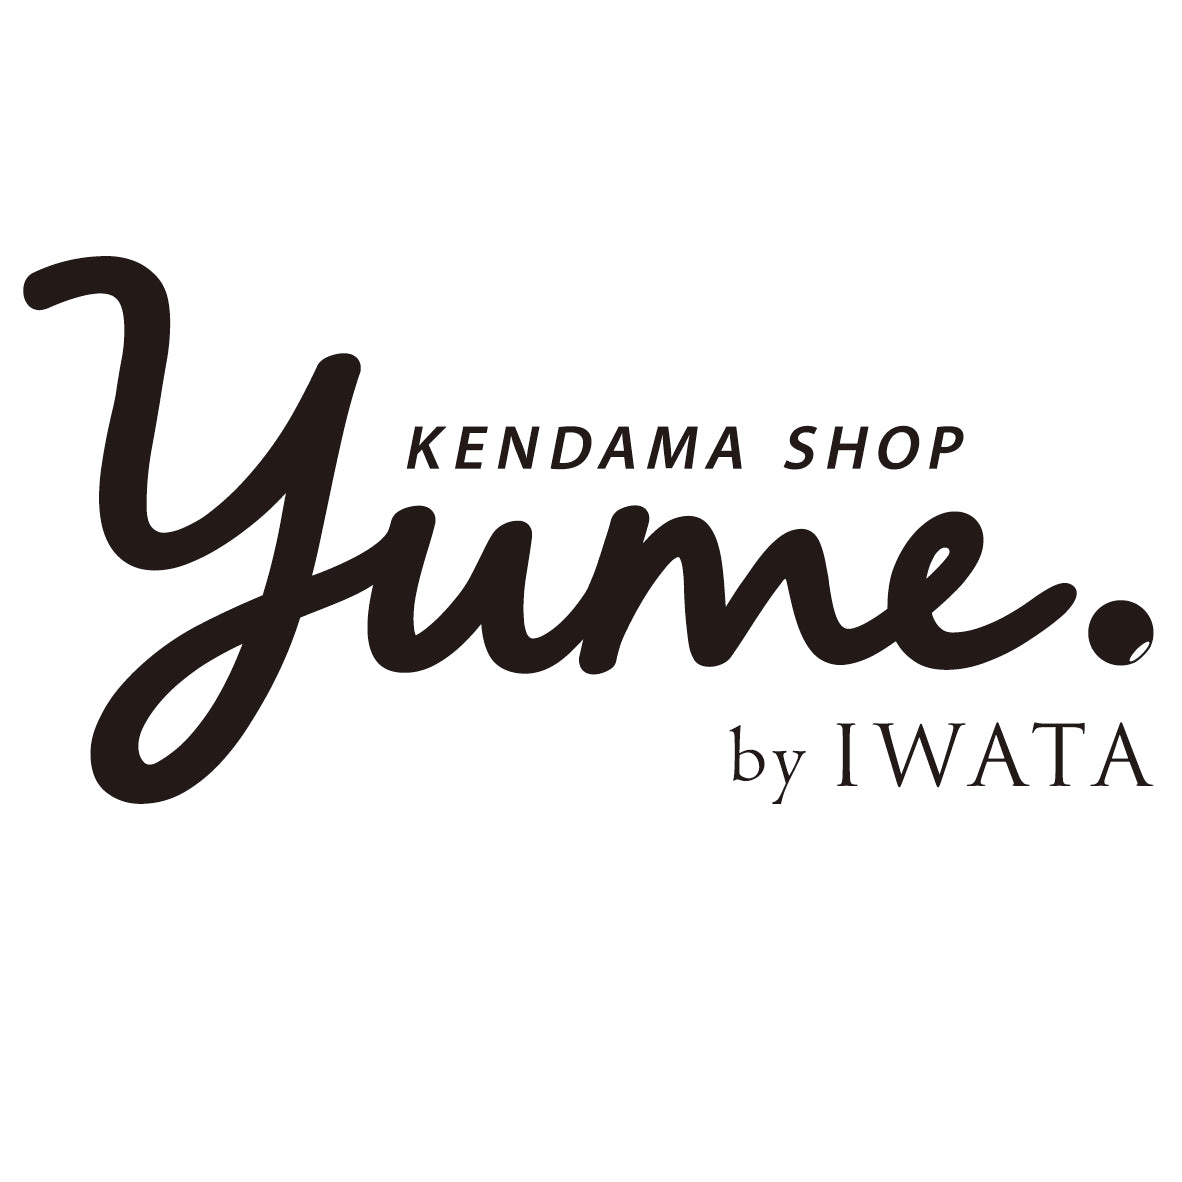 Kendama Shop Yume. by IWATA